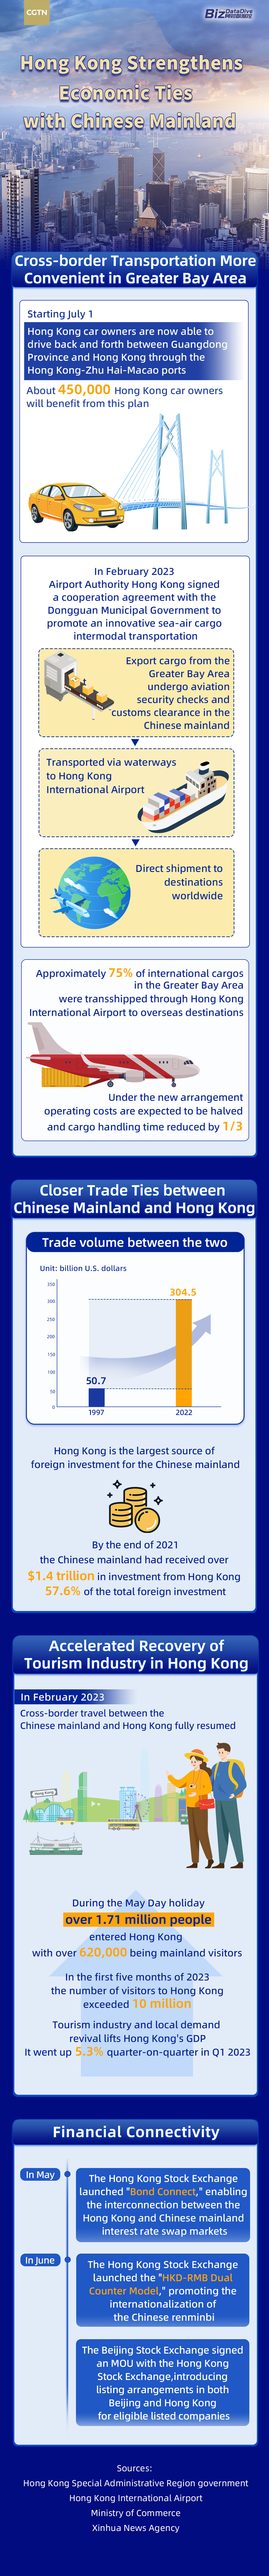 BizDataDive: Hong Kong strengthens economic ties with Chinese mainland